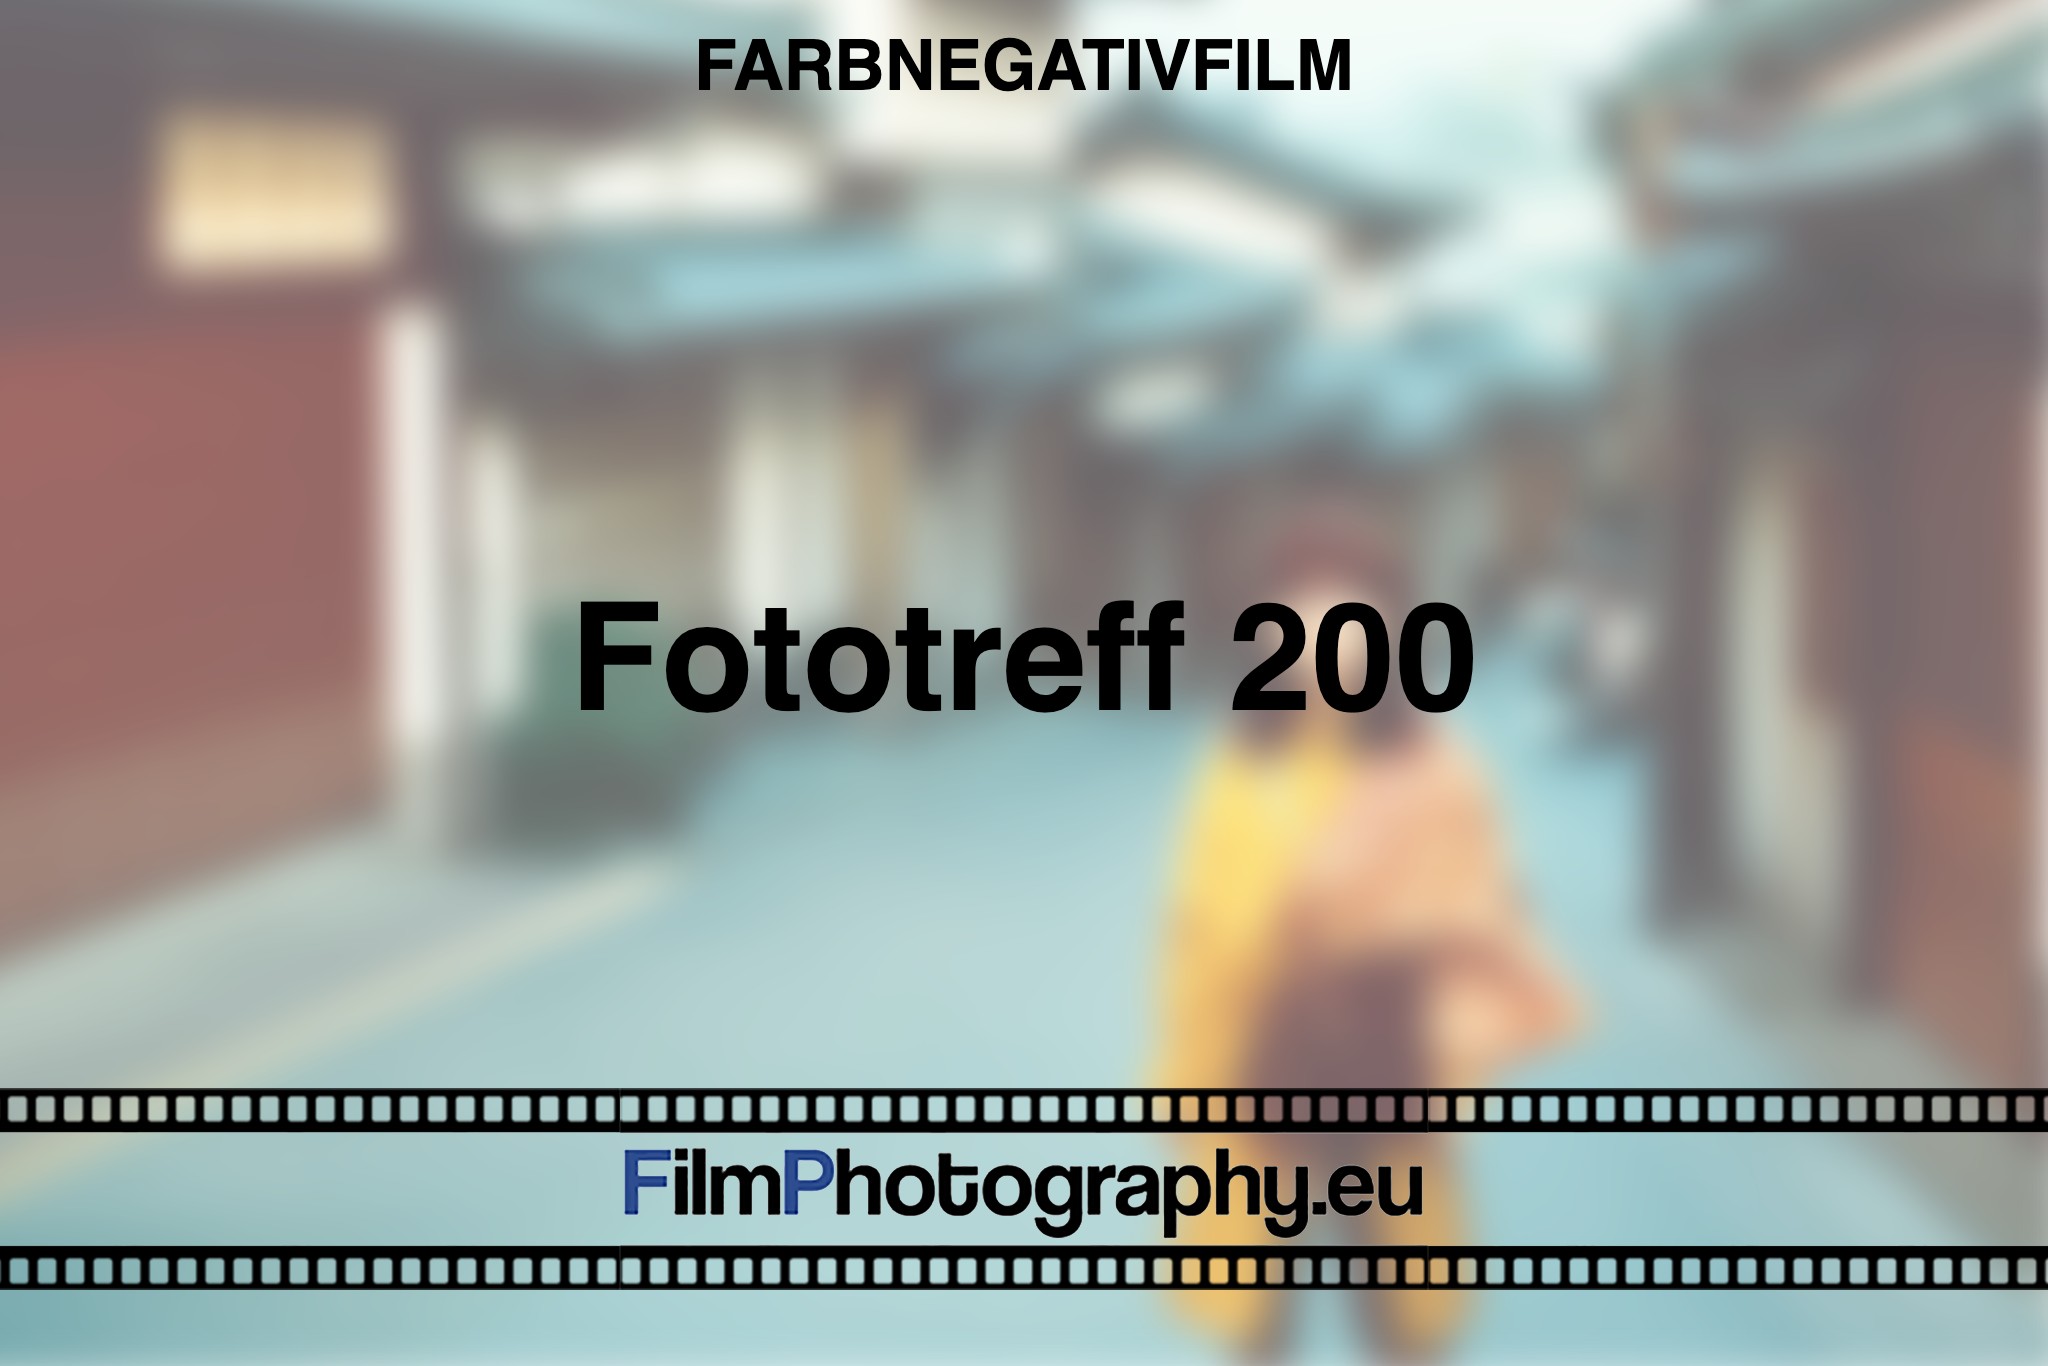 fototreff-200-farbnegativfilm-bnv